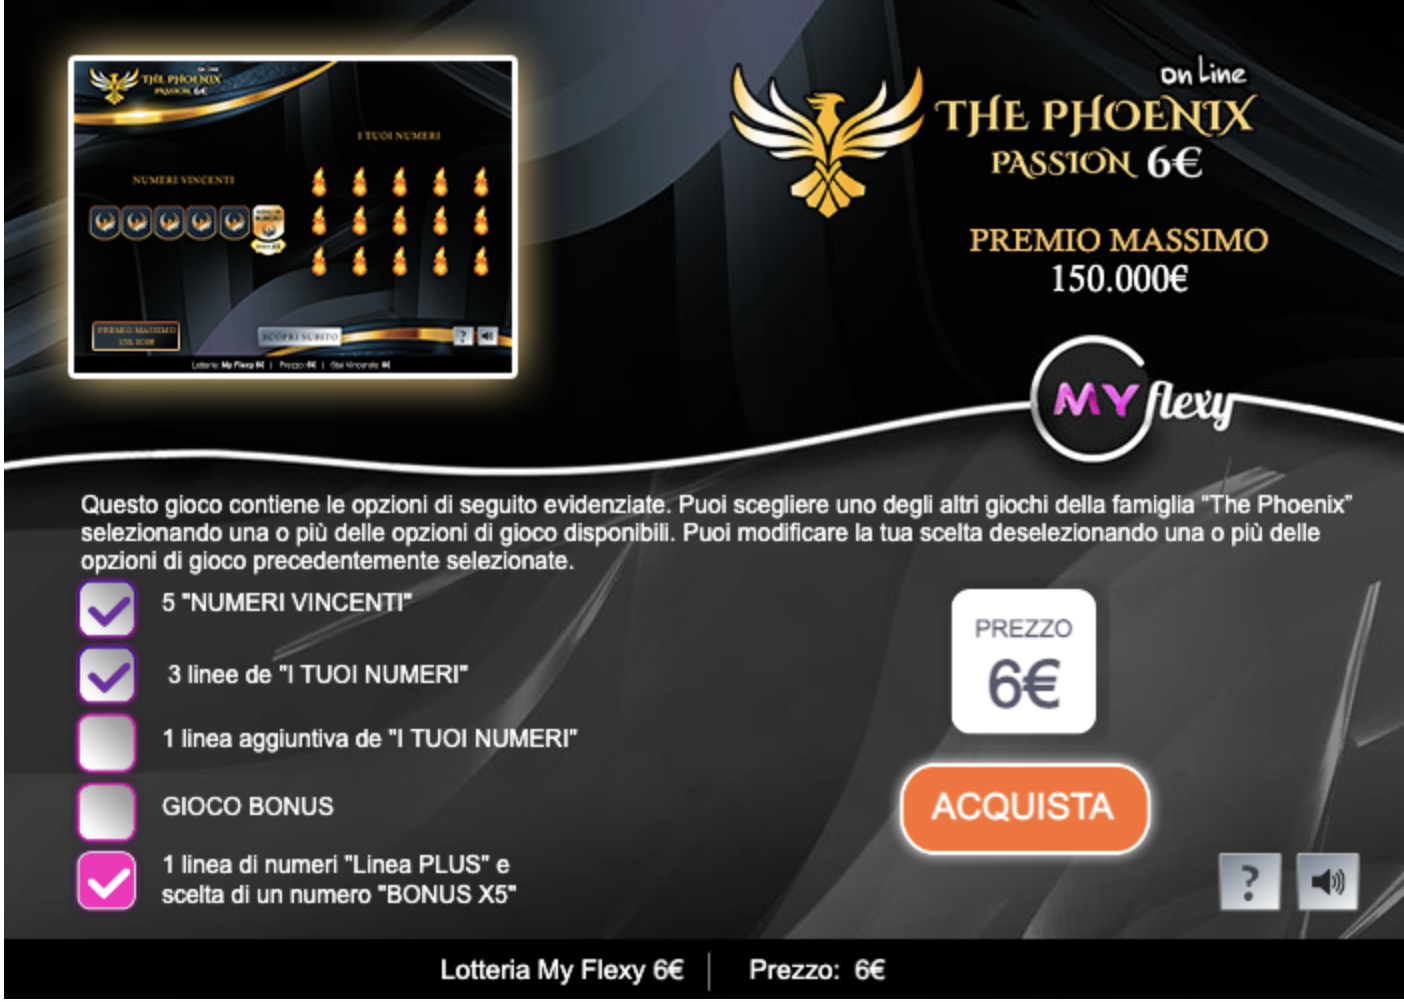 The Phoenix Passion 6€ - online